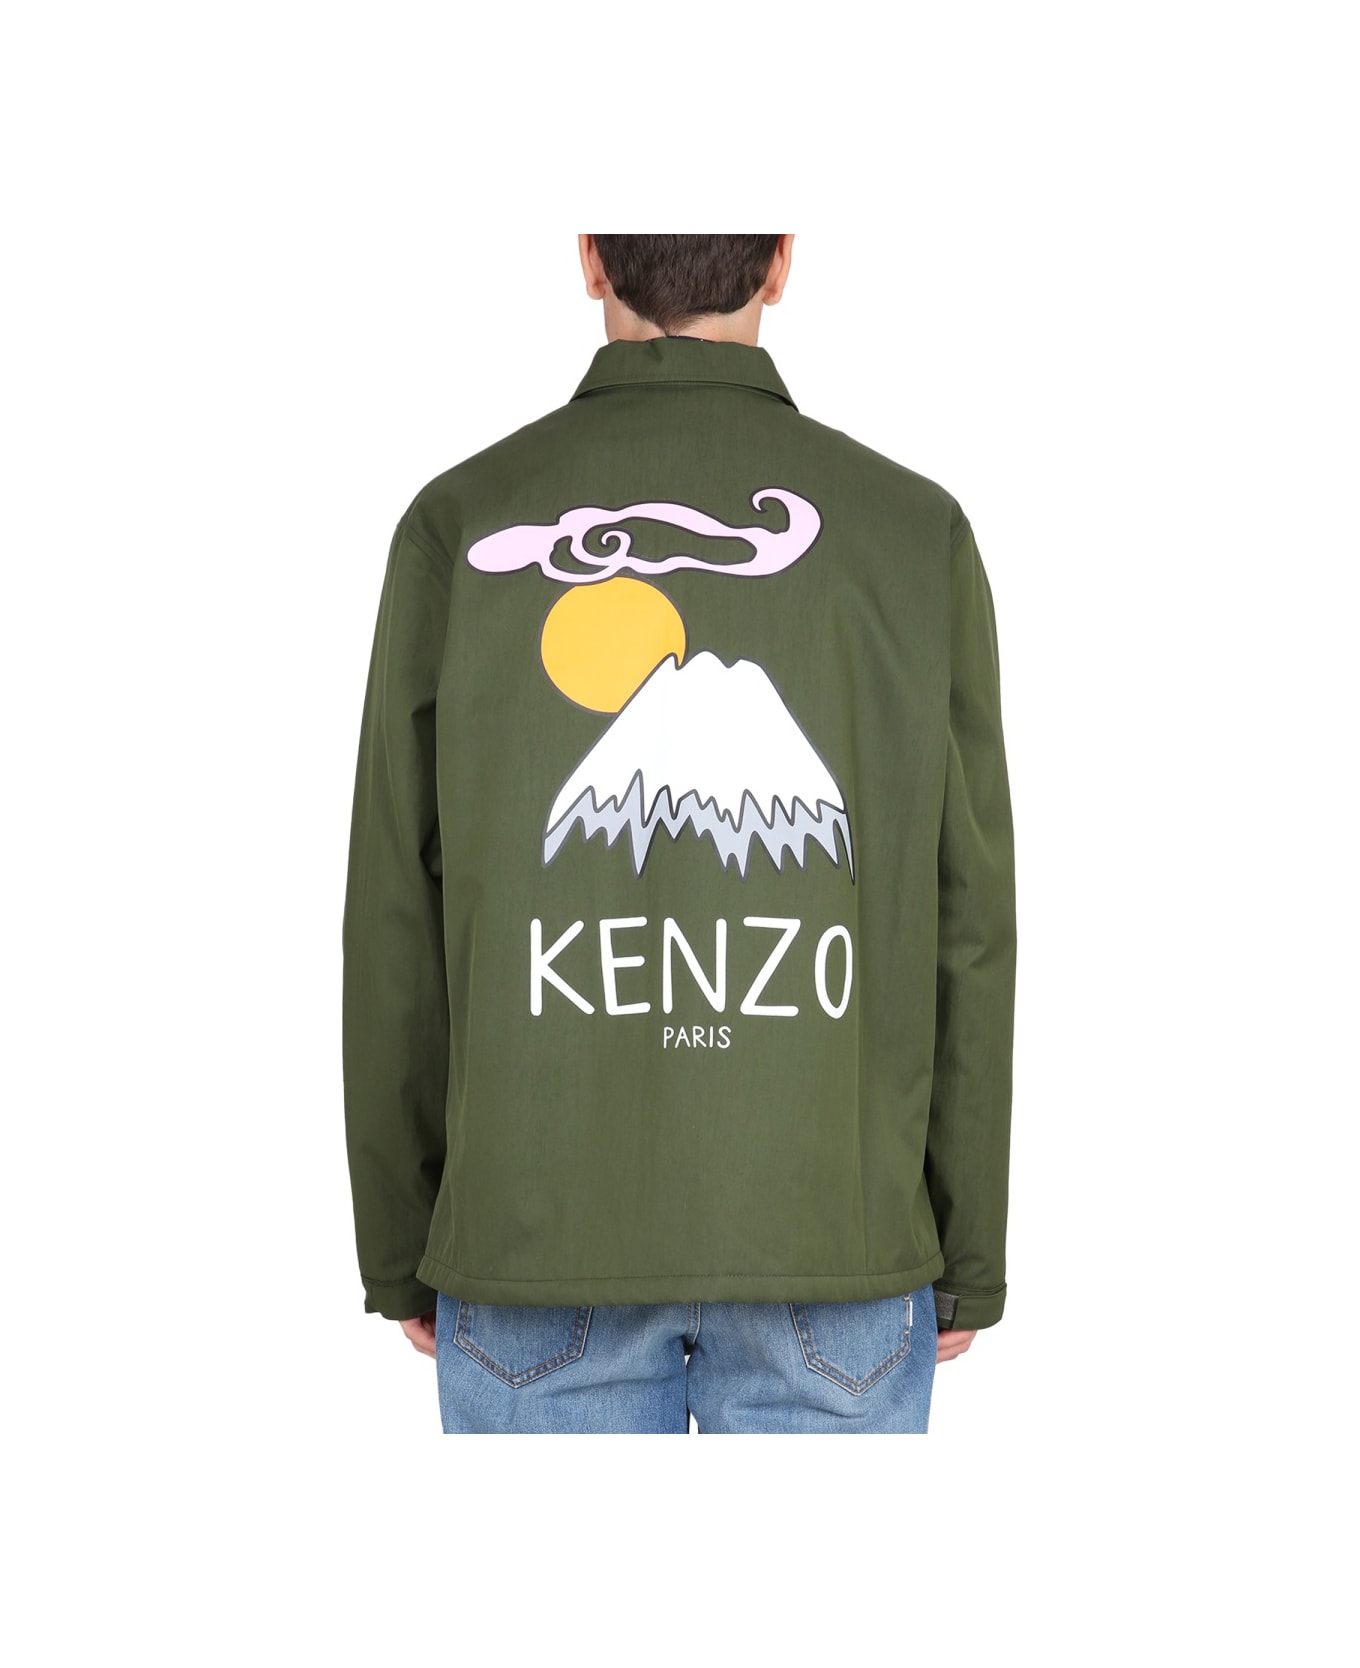 Kenzo Coach Jacket - MILITARY GREEN ジャケット